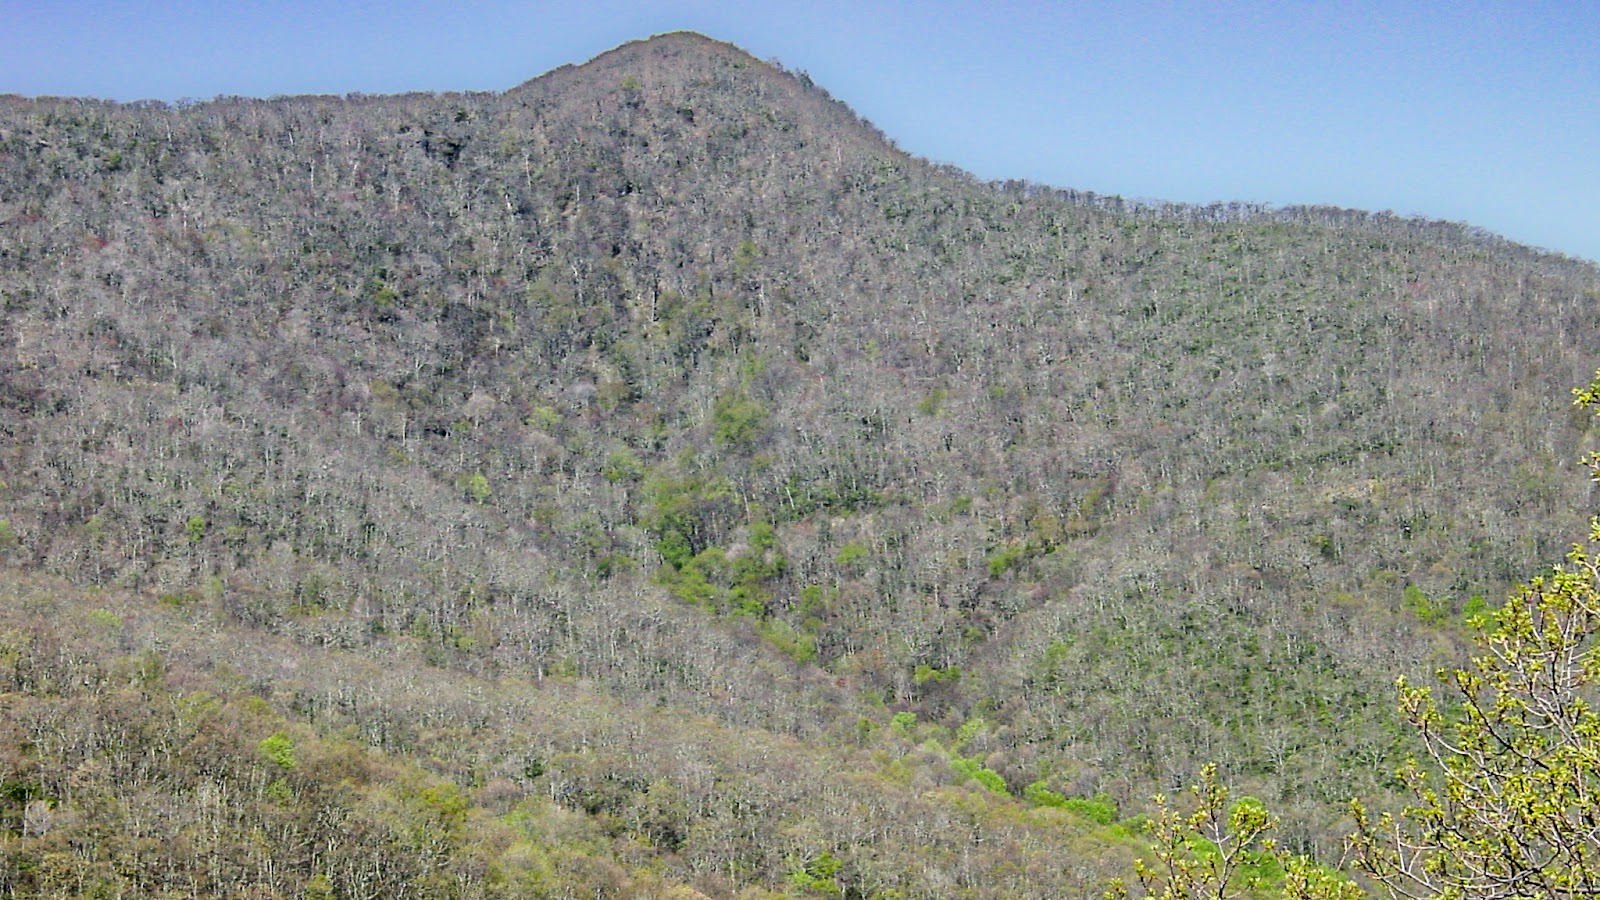 A single peak with barren trees